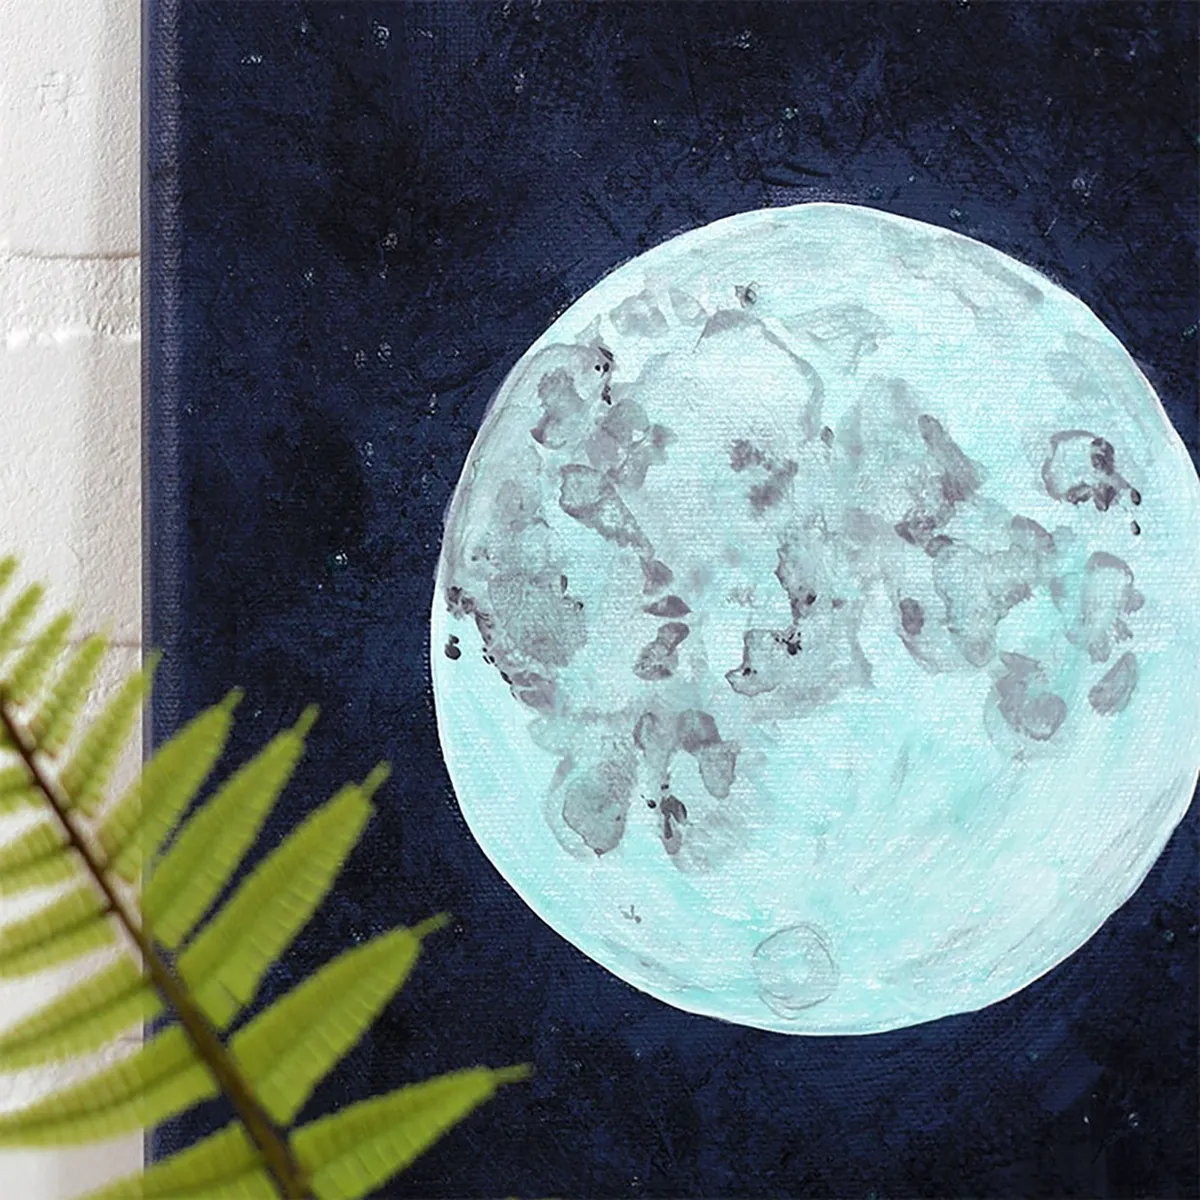 Easy acrylic painting ideas – glow in the dark moon